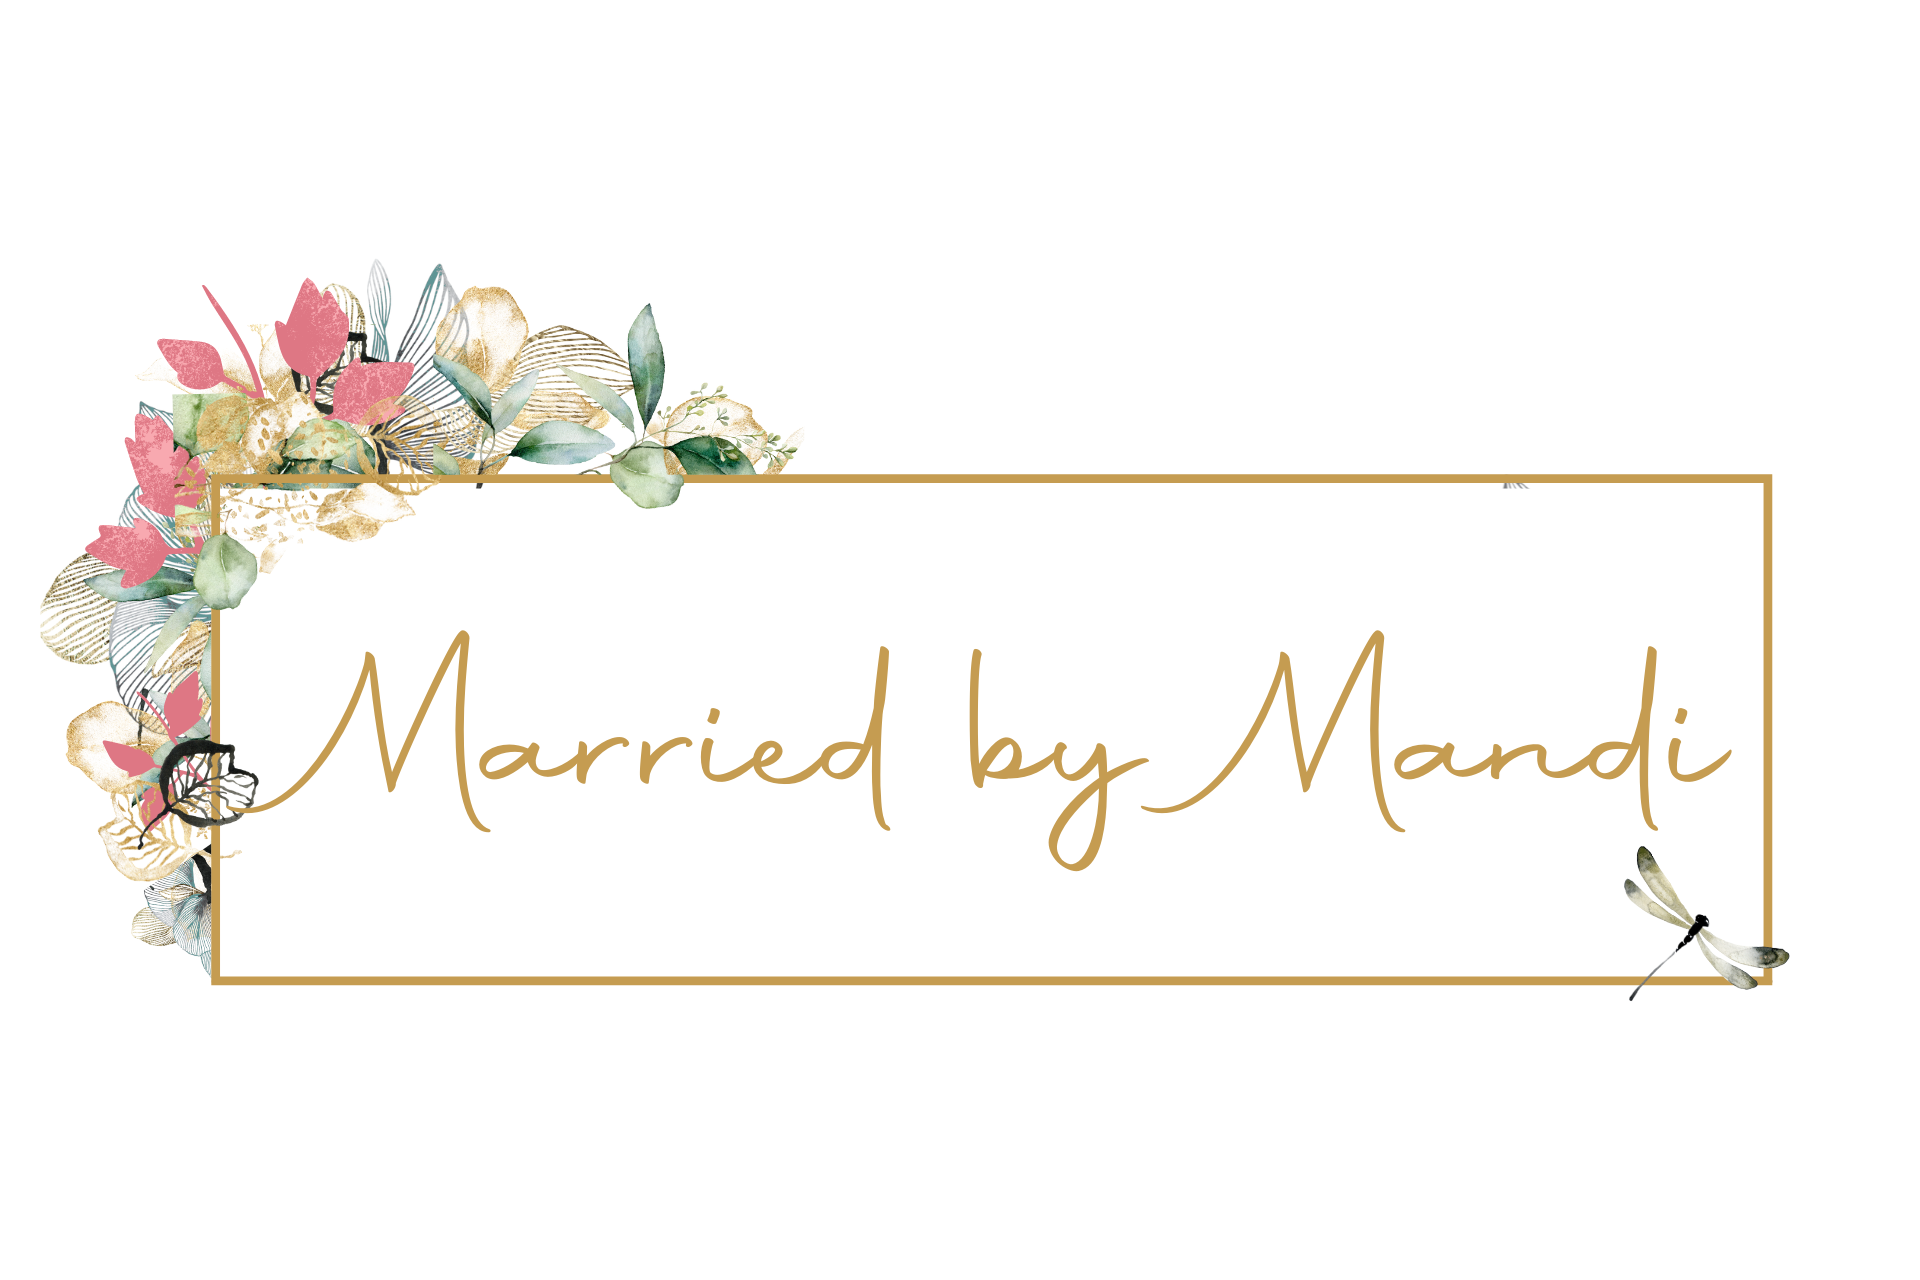 Married by Mandi